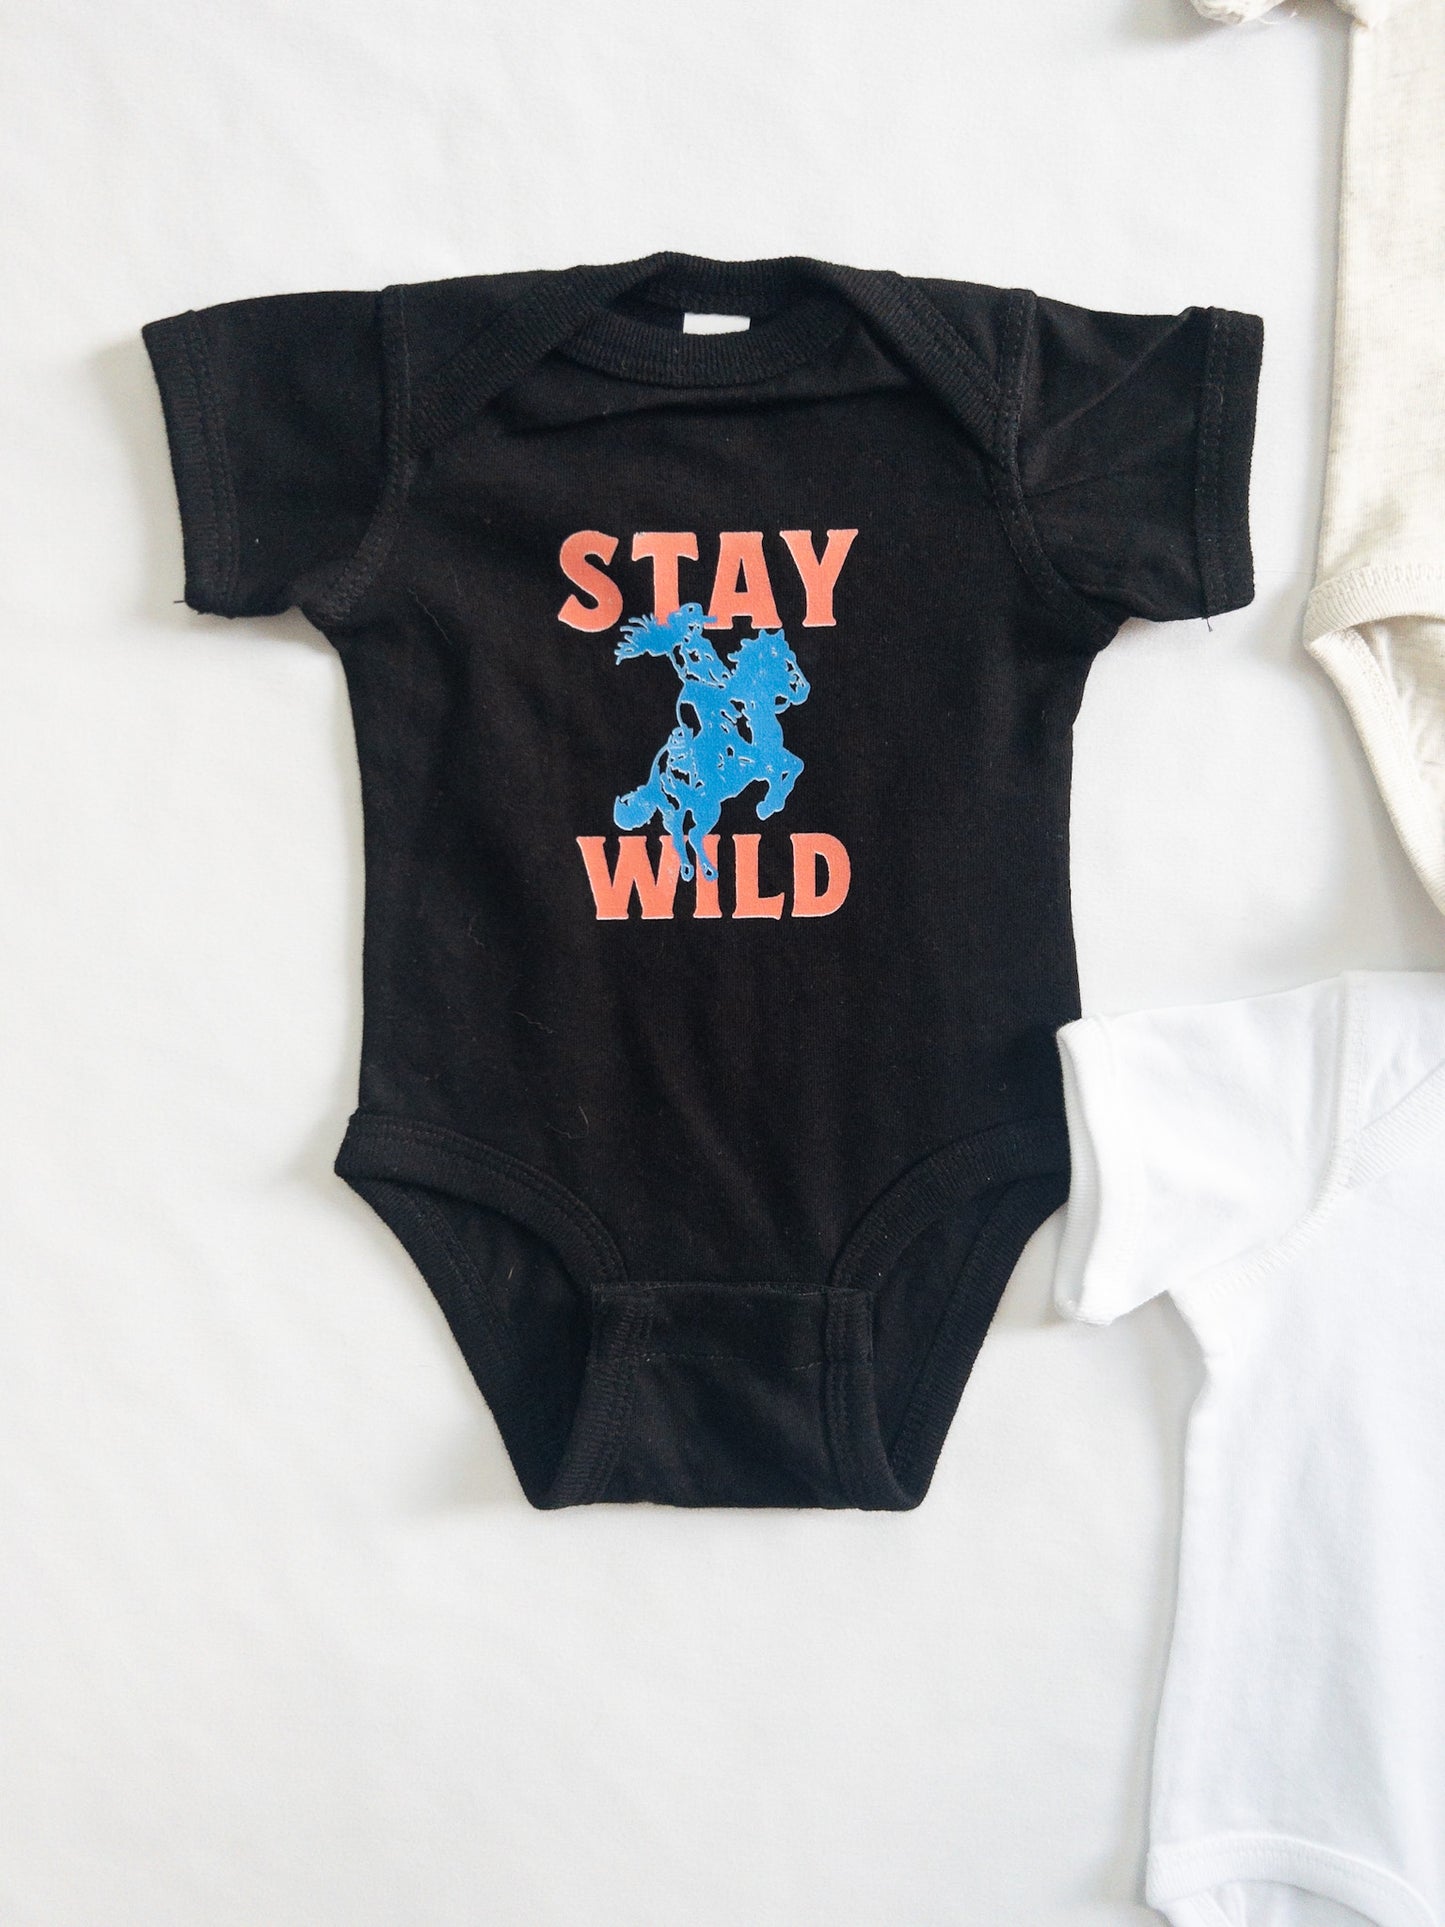 SAMPLE SALE - Stay Wild Cowboy Wild West Theme Baby Bodysuit